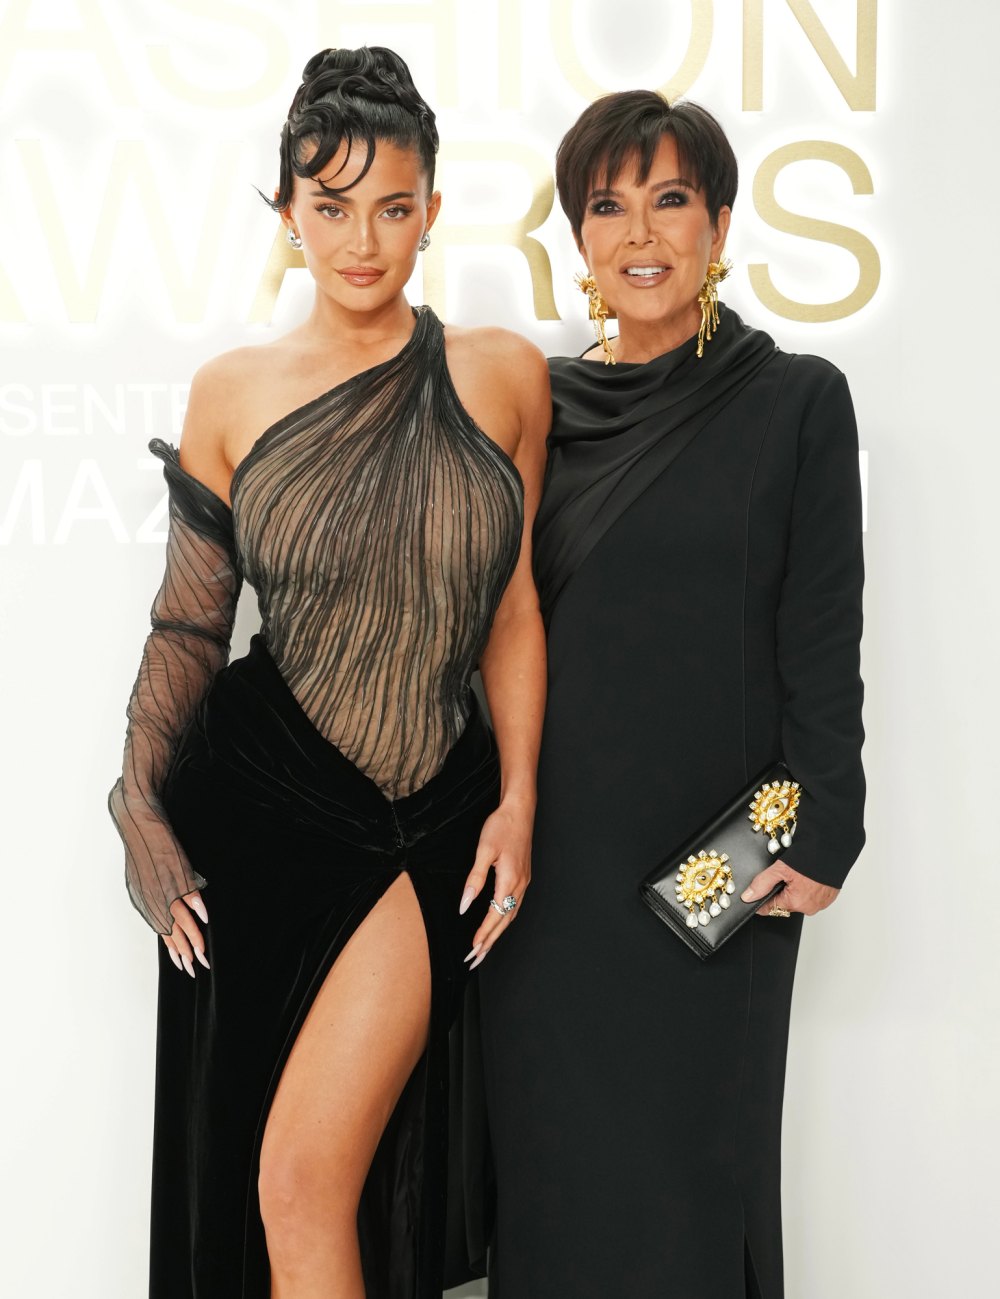 Kylie Jenner Tells Jennifer Lawrence It Was A Challenge to Build Makeup Line